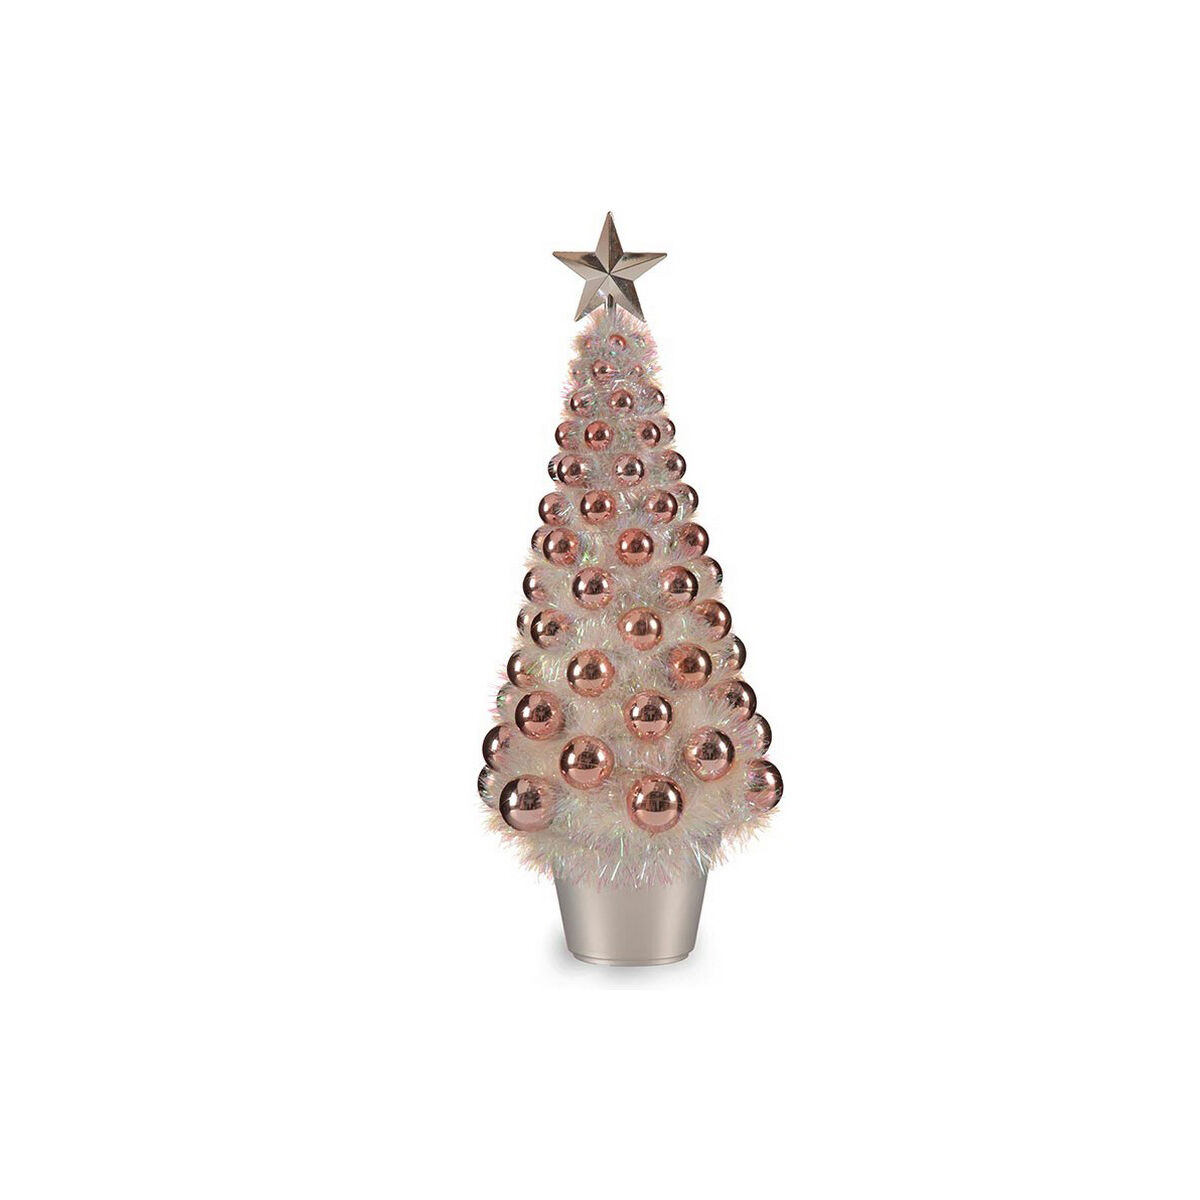 Christmas Tree Iridescent 21,5 x 51 x 21,5 cm Pink Plastic polypropylene